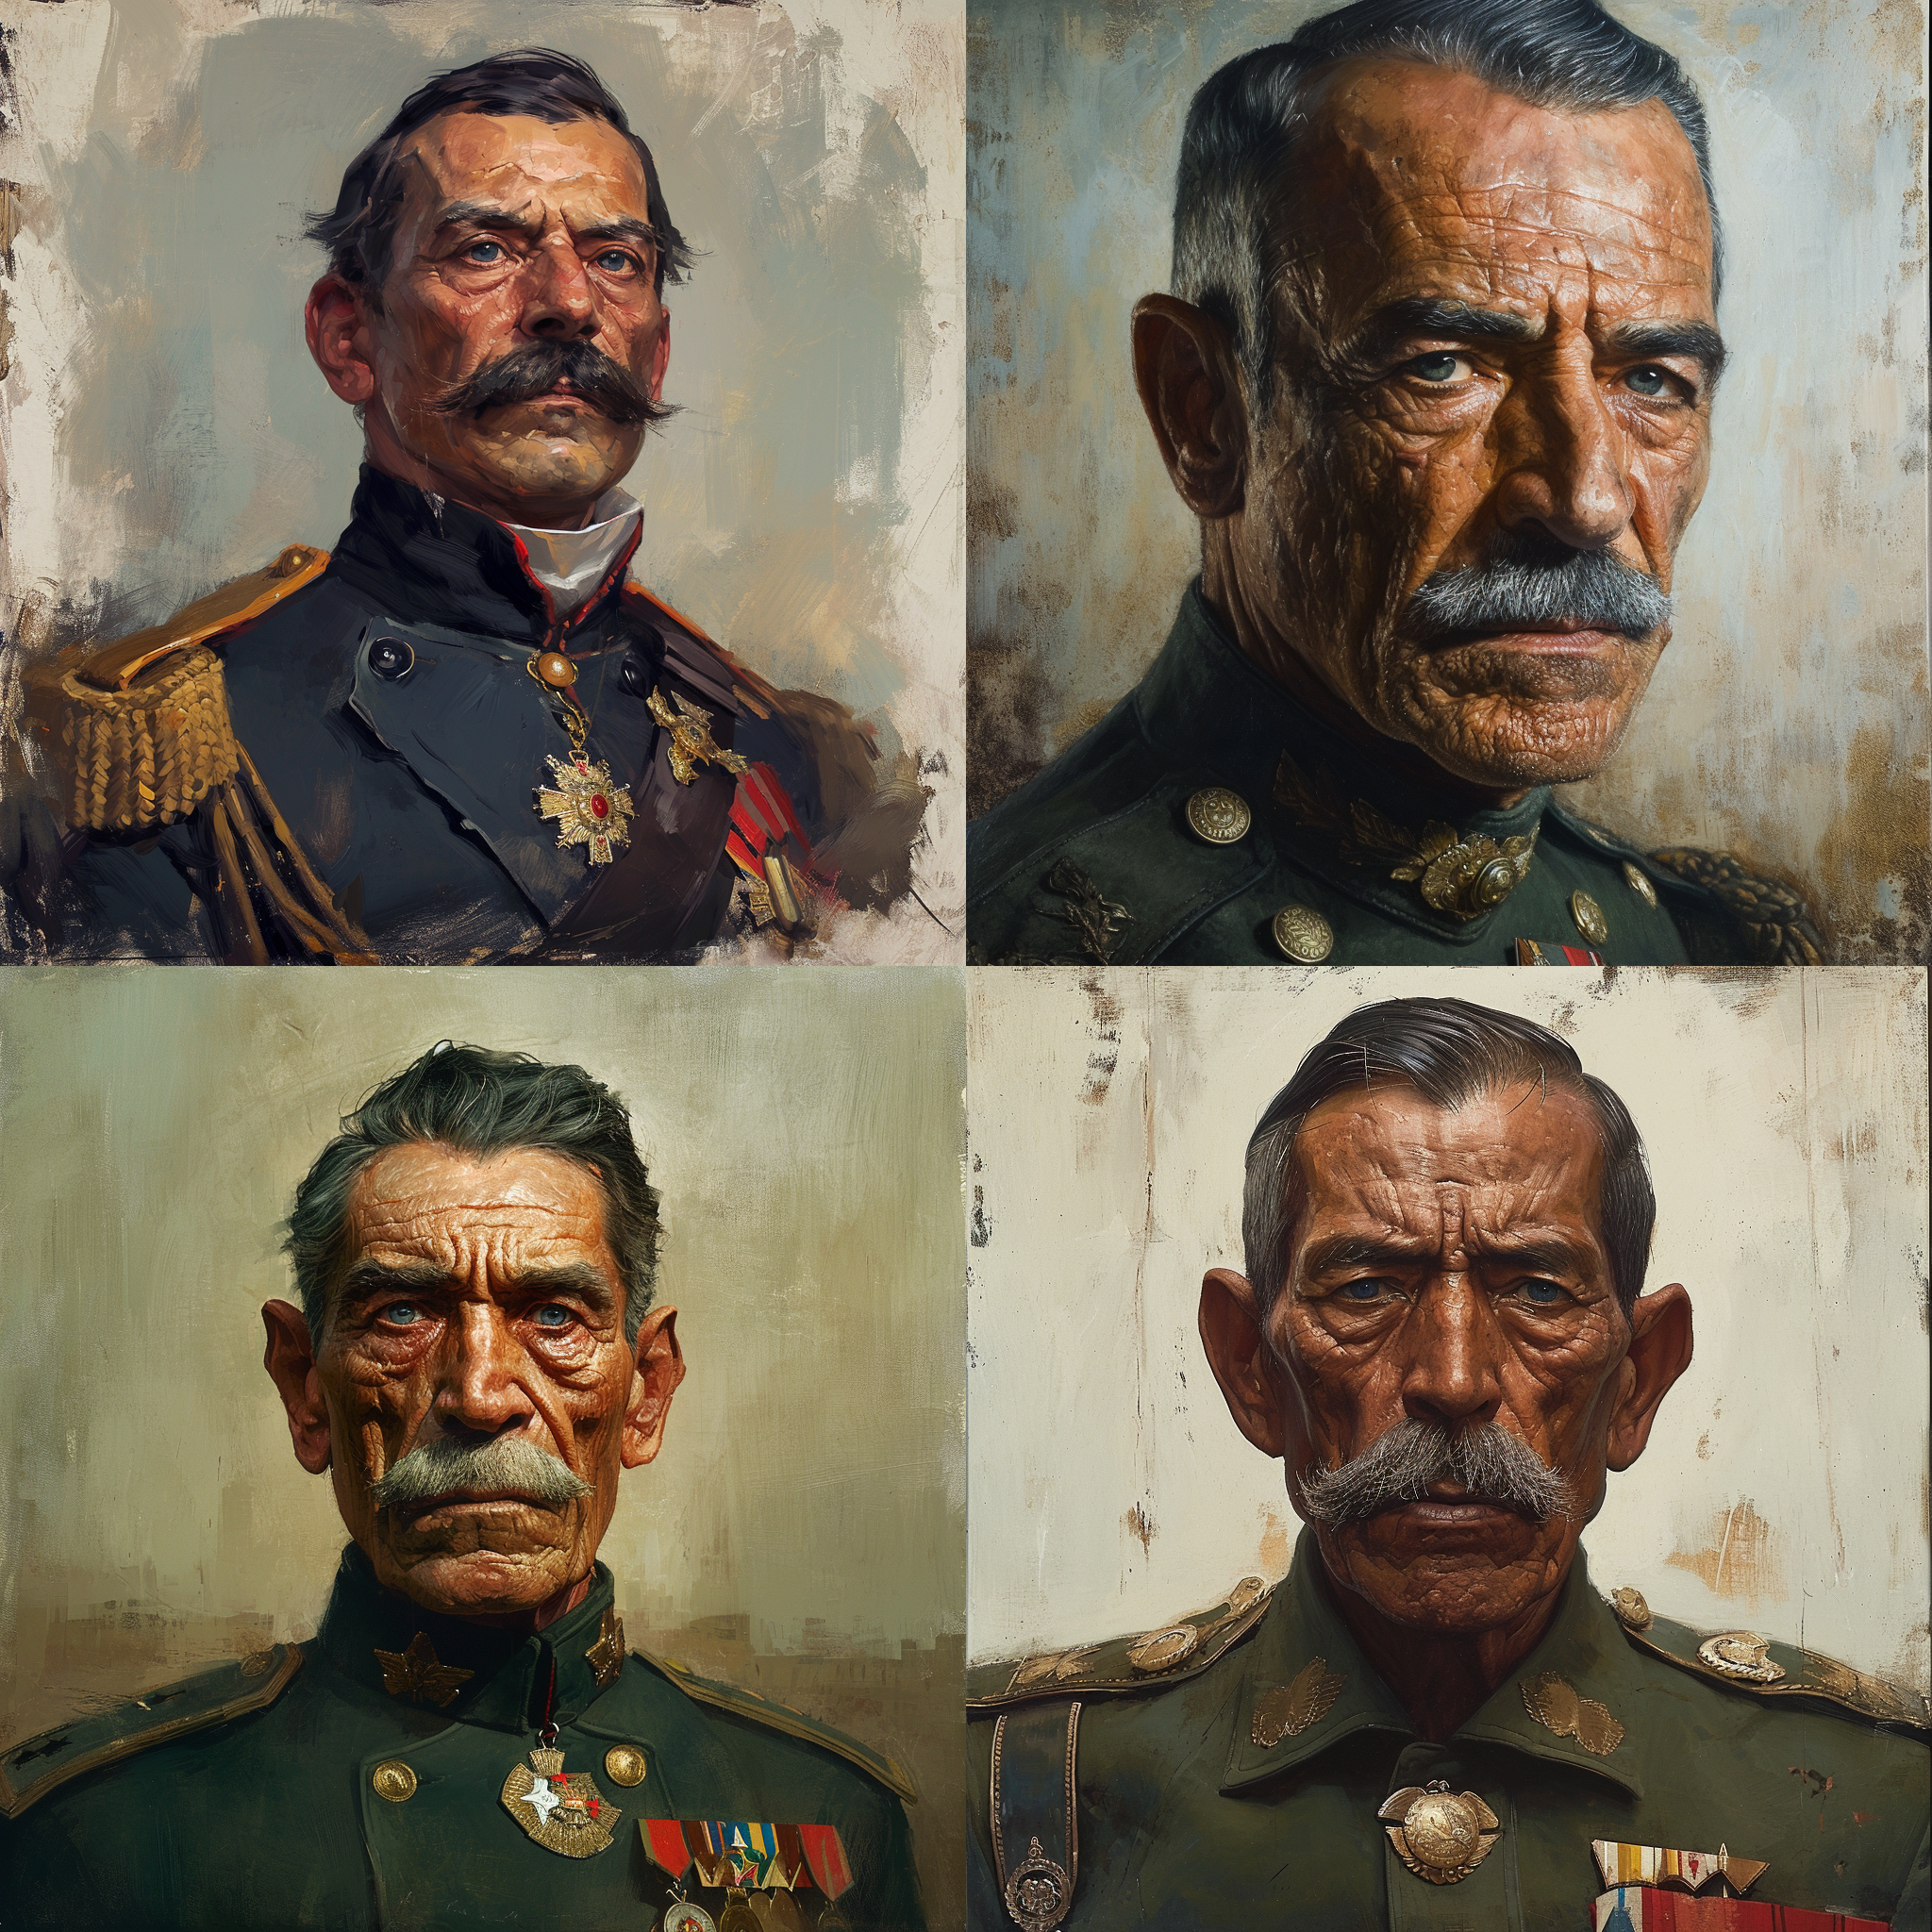 A reroll of Colonel Buendía’s portrait